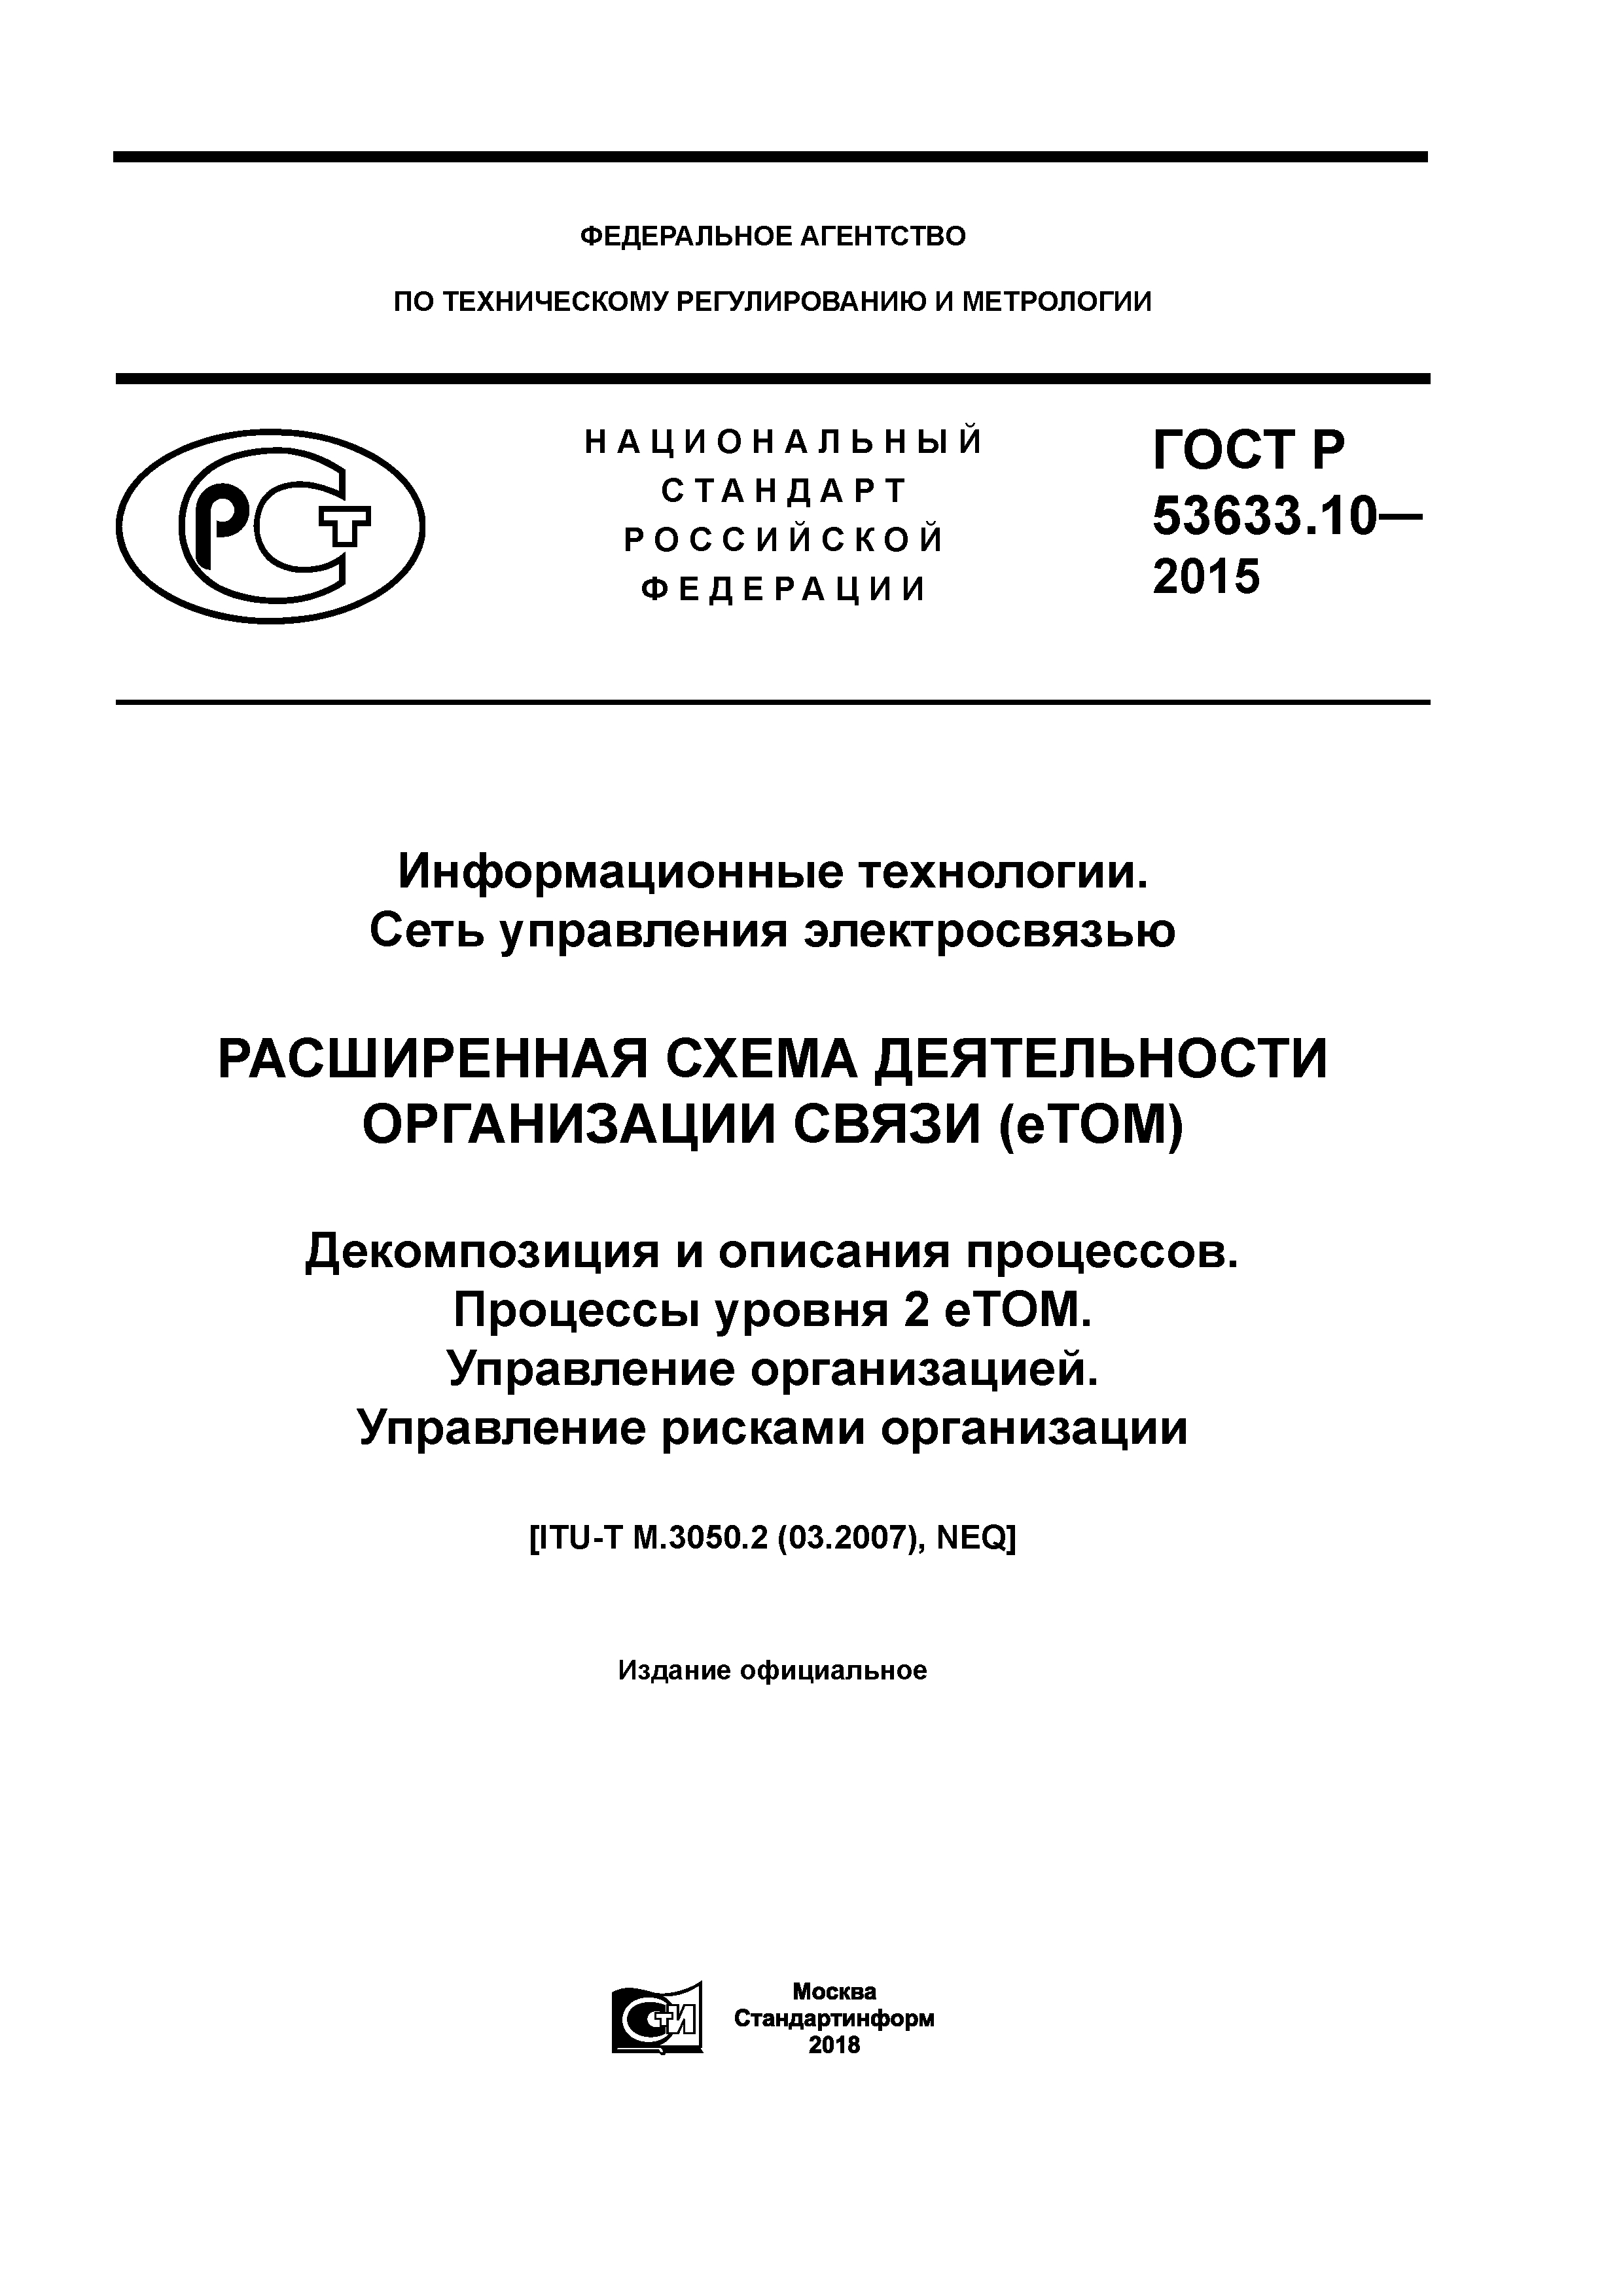 ГОСТ Р 53633.10-2015